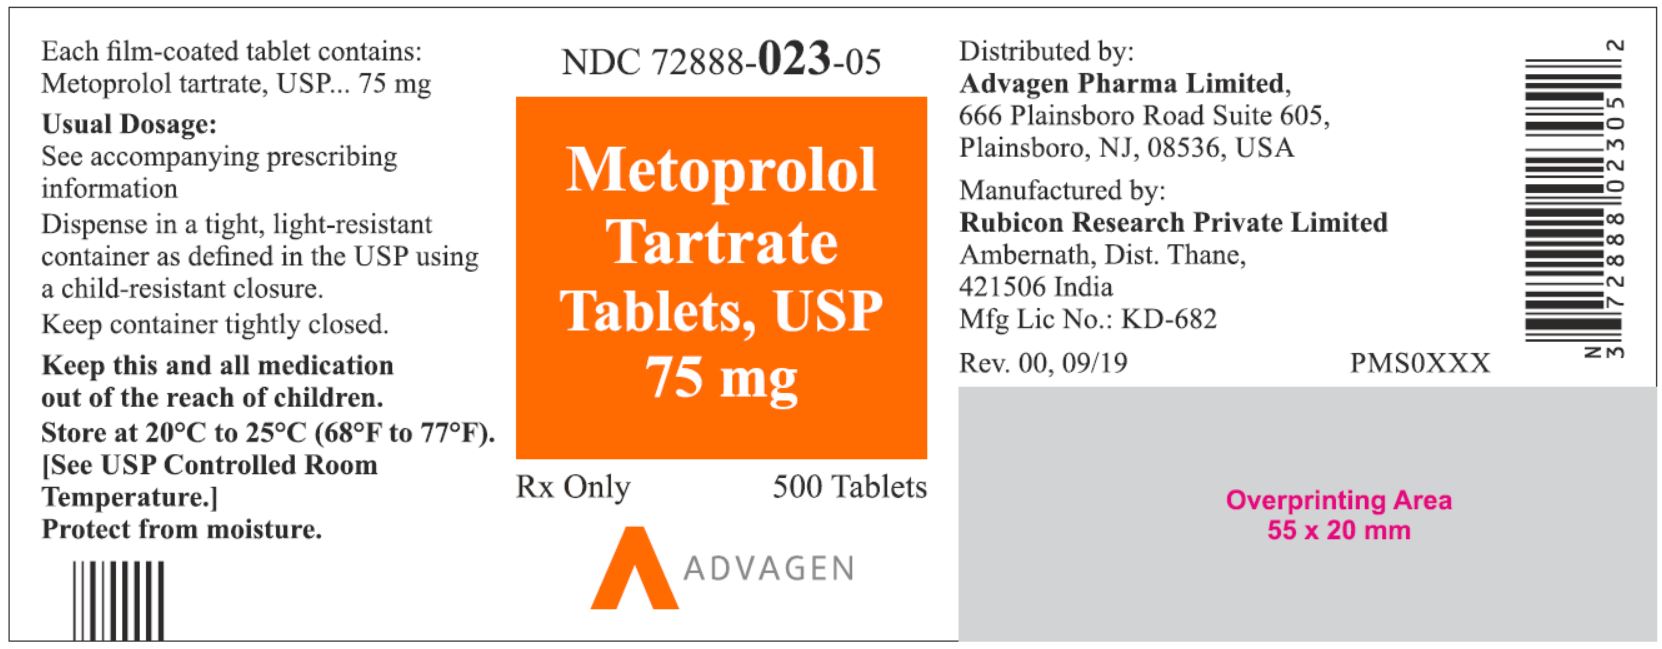 NDC: <a href=/NDC/72888-023-05>72888-023-05</a> - Metoprolol Tartrate Tablets, USP 75 mg - 500 Tablets